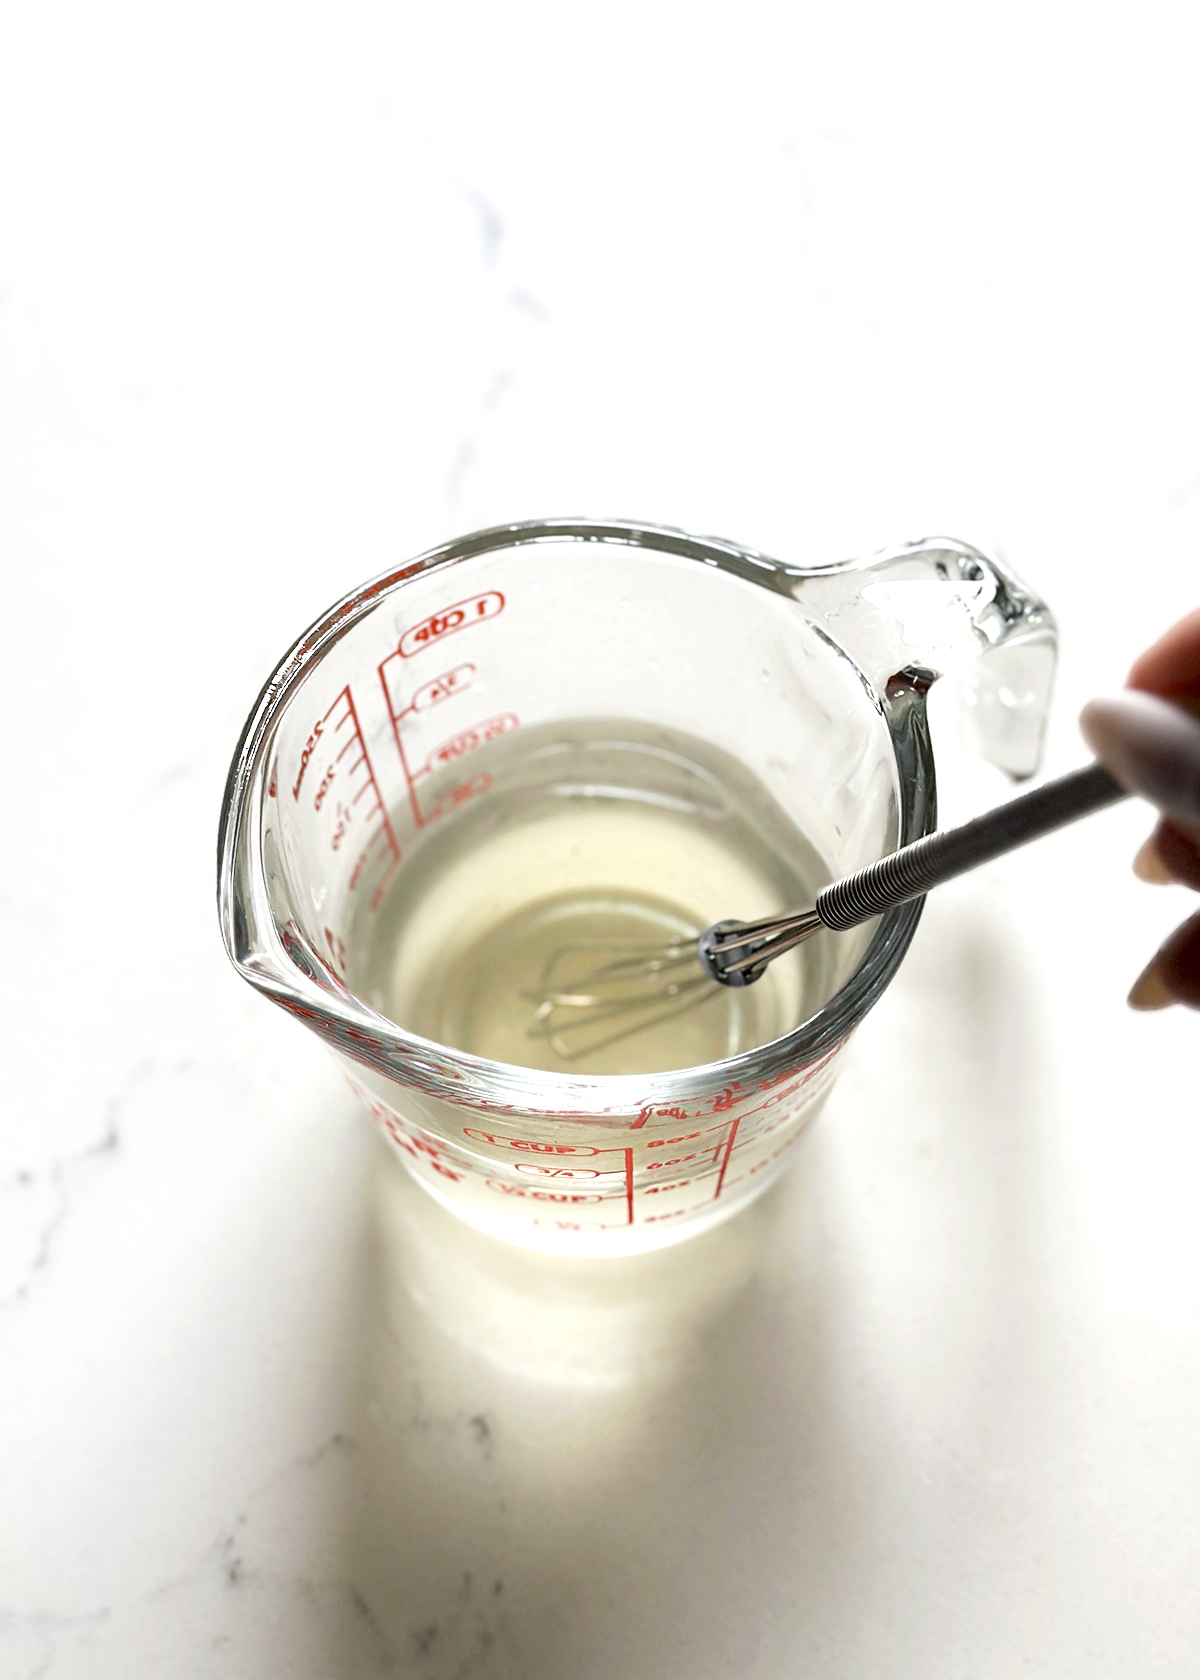 vinegar brine in glass measuring cup